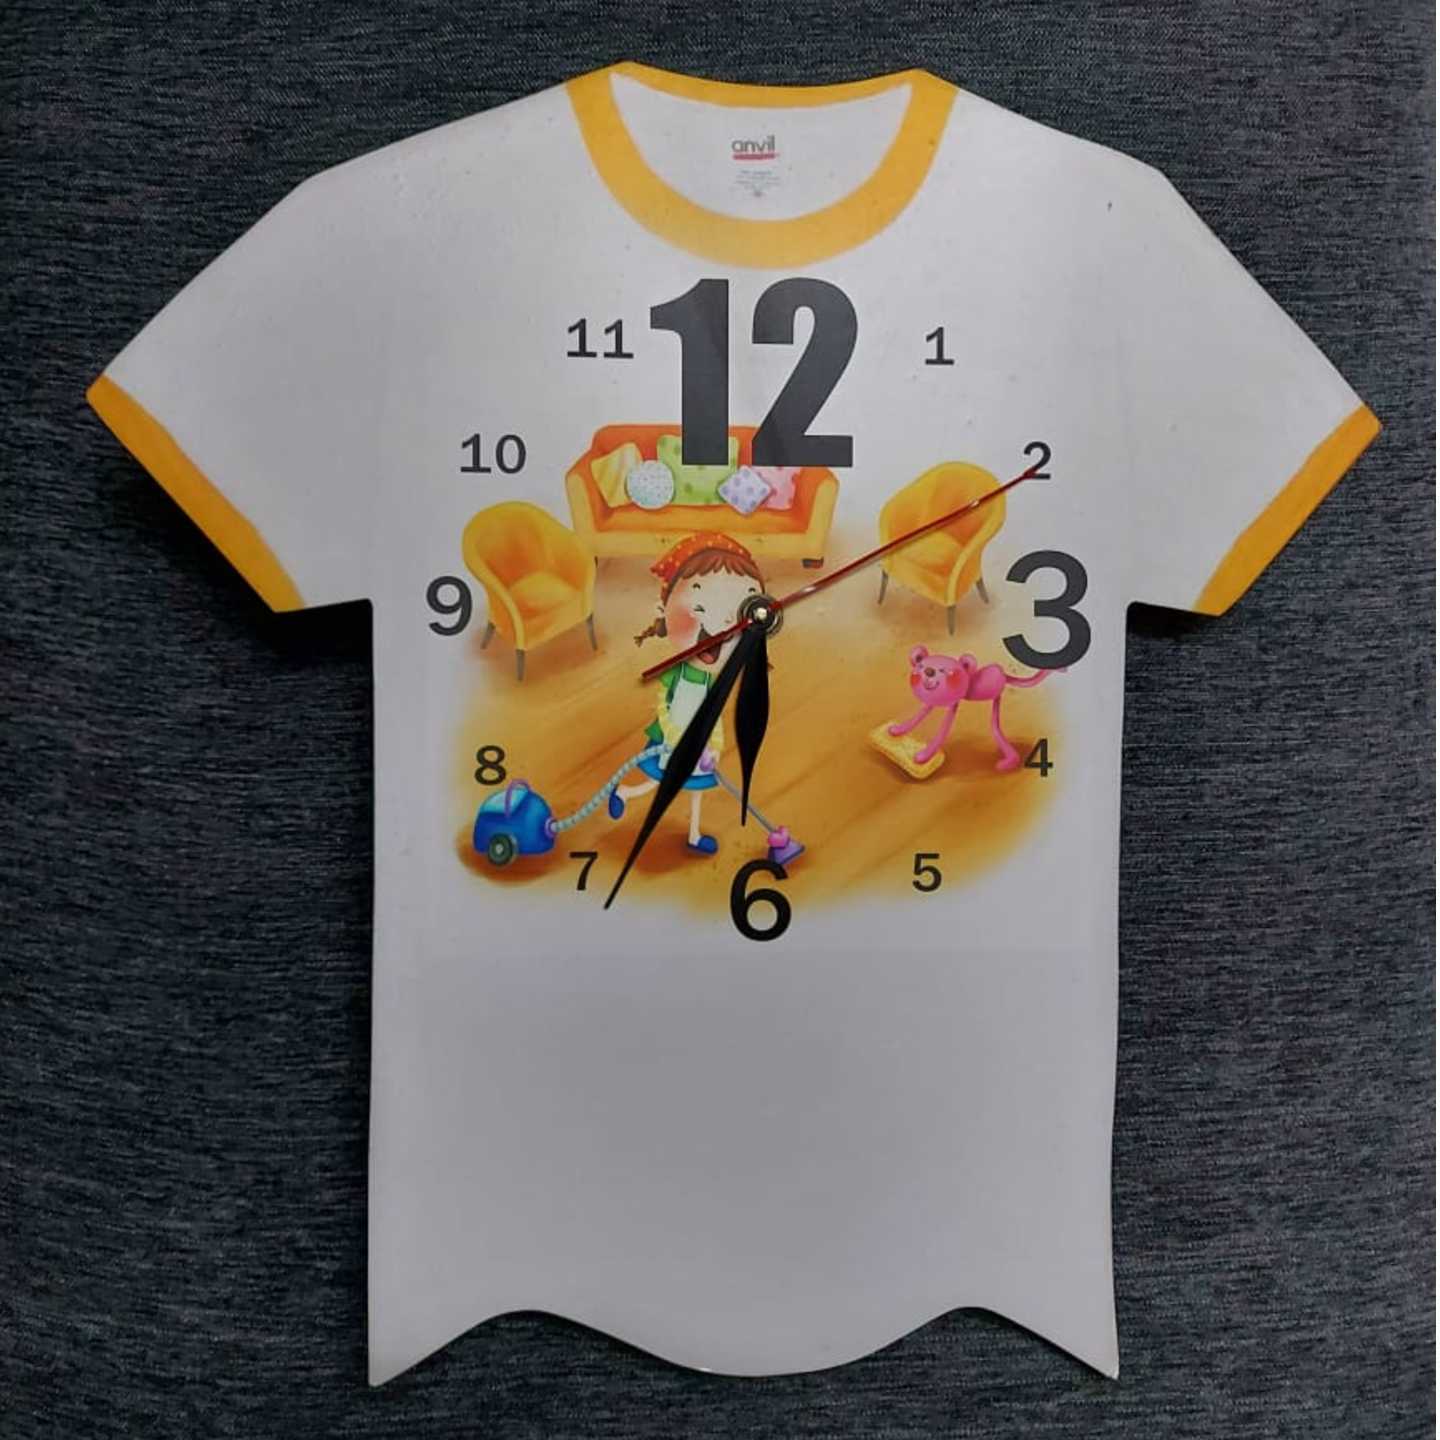 T-shirt shape kids wall clock